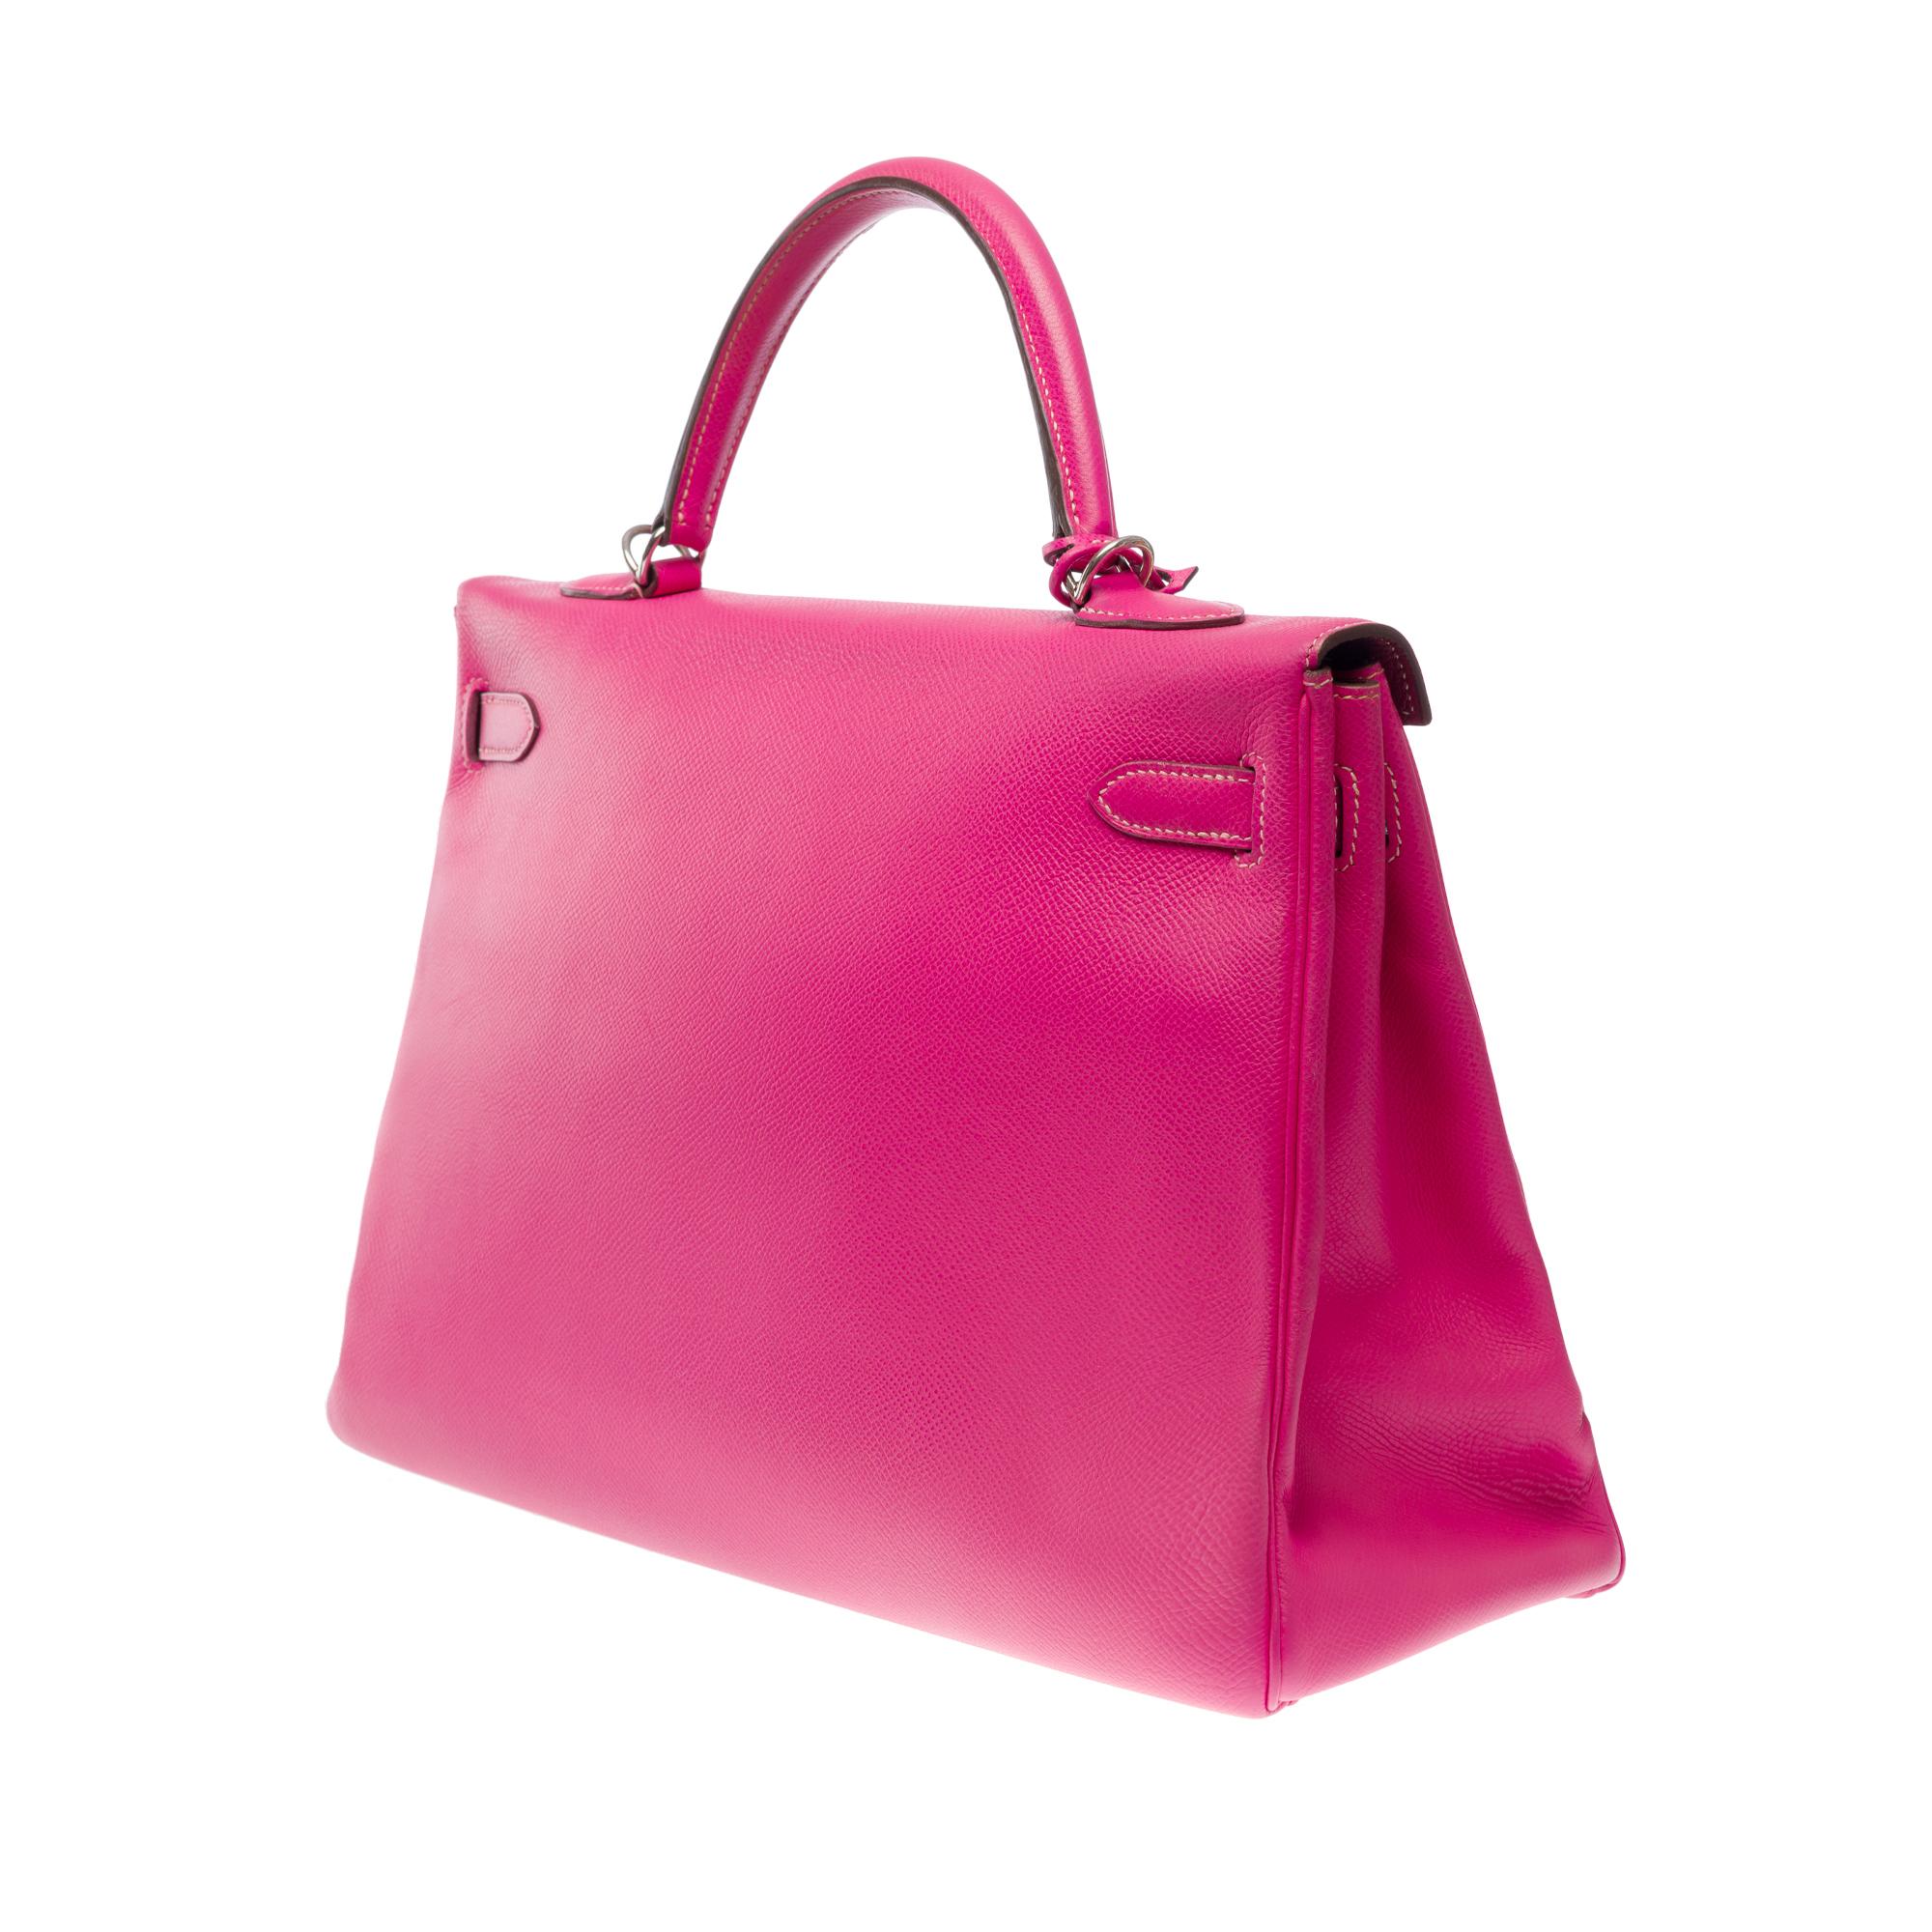 Women's or Men's Candy Edition Hermès Kelly 35 retourne handbag strap in Pink Epsom leather, SHW